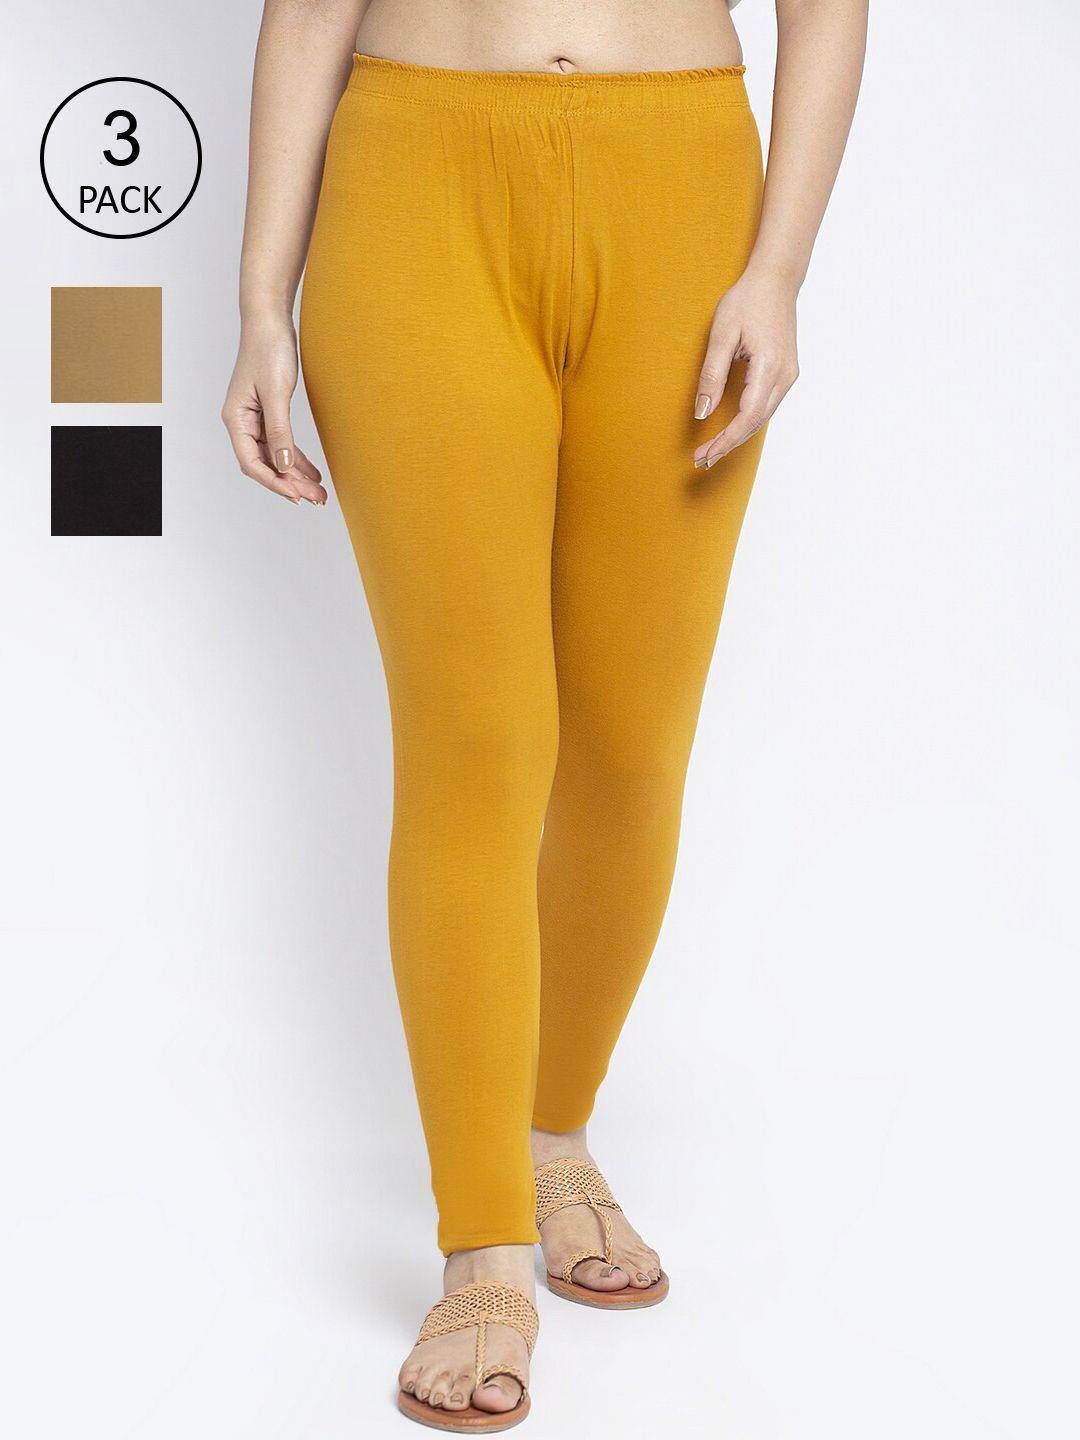 gracit-women-pack-of-3-black-&-mustard-yellow-leggings